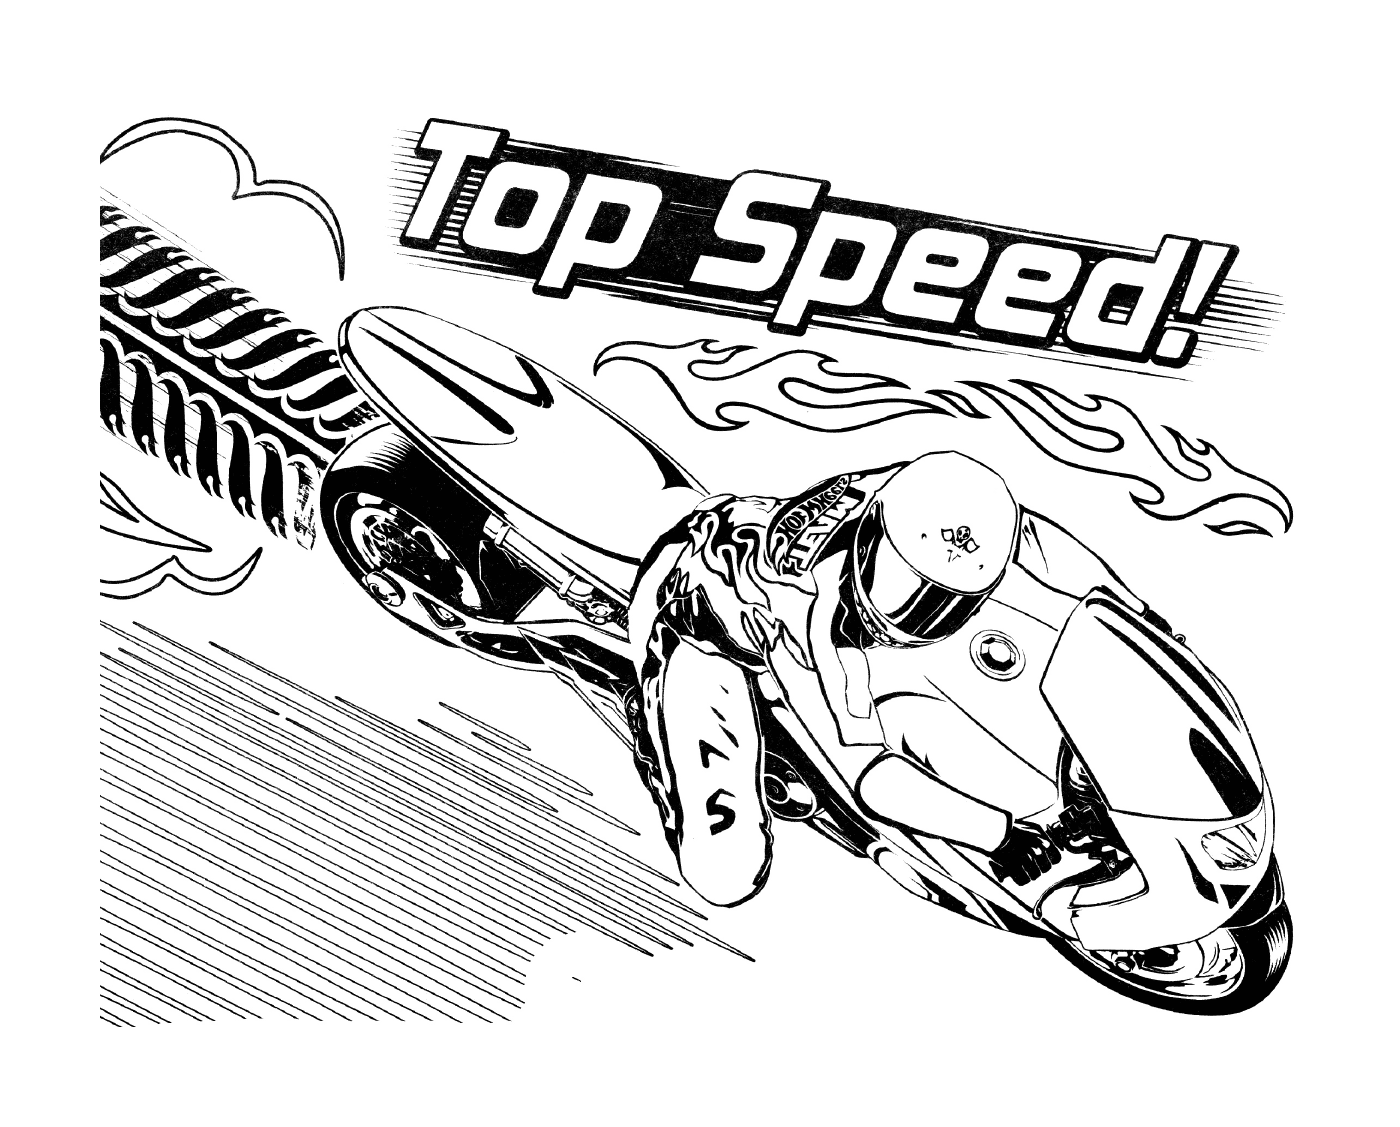  High-speed race 